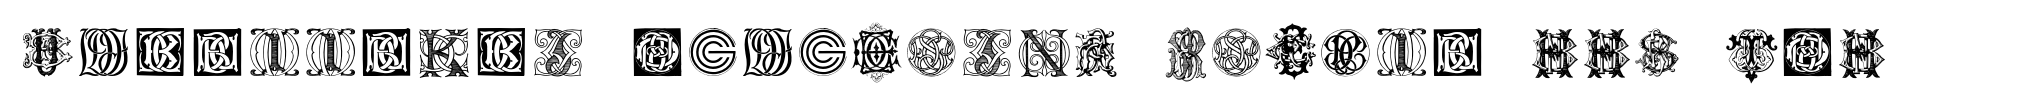 Intellecta Monograms Triple BBA EMB image